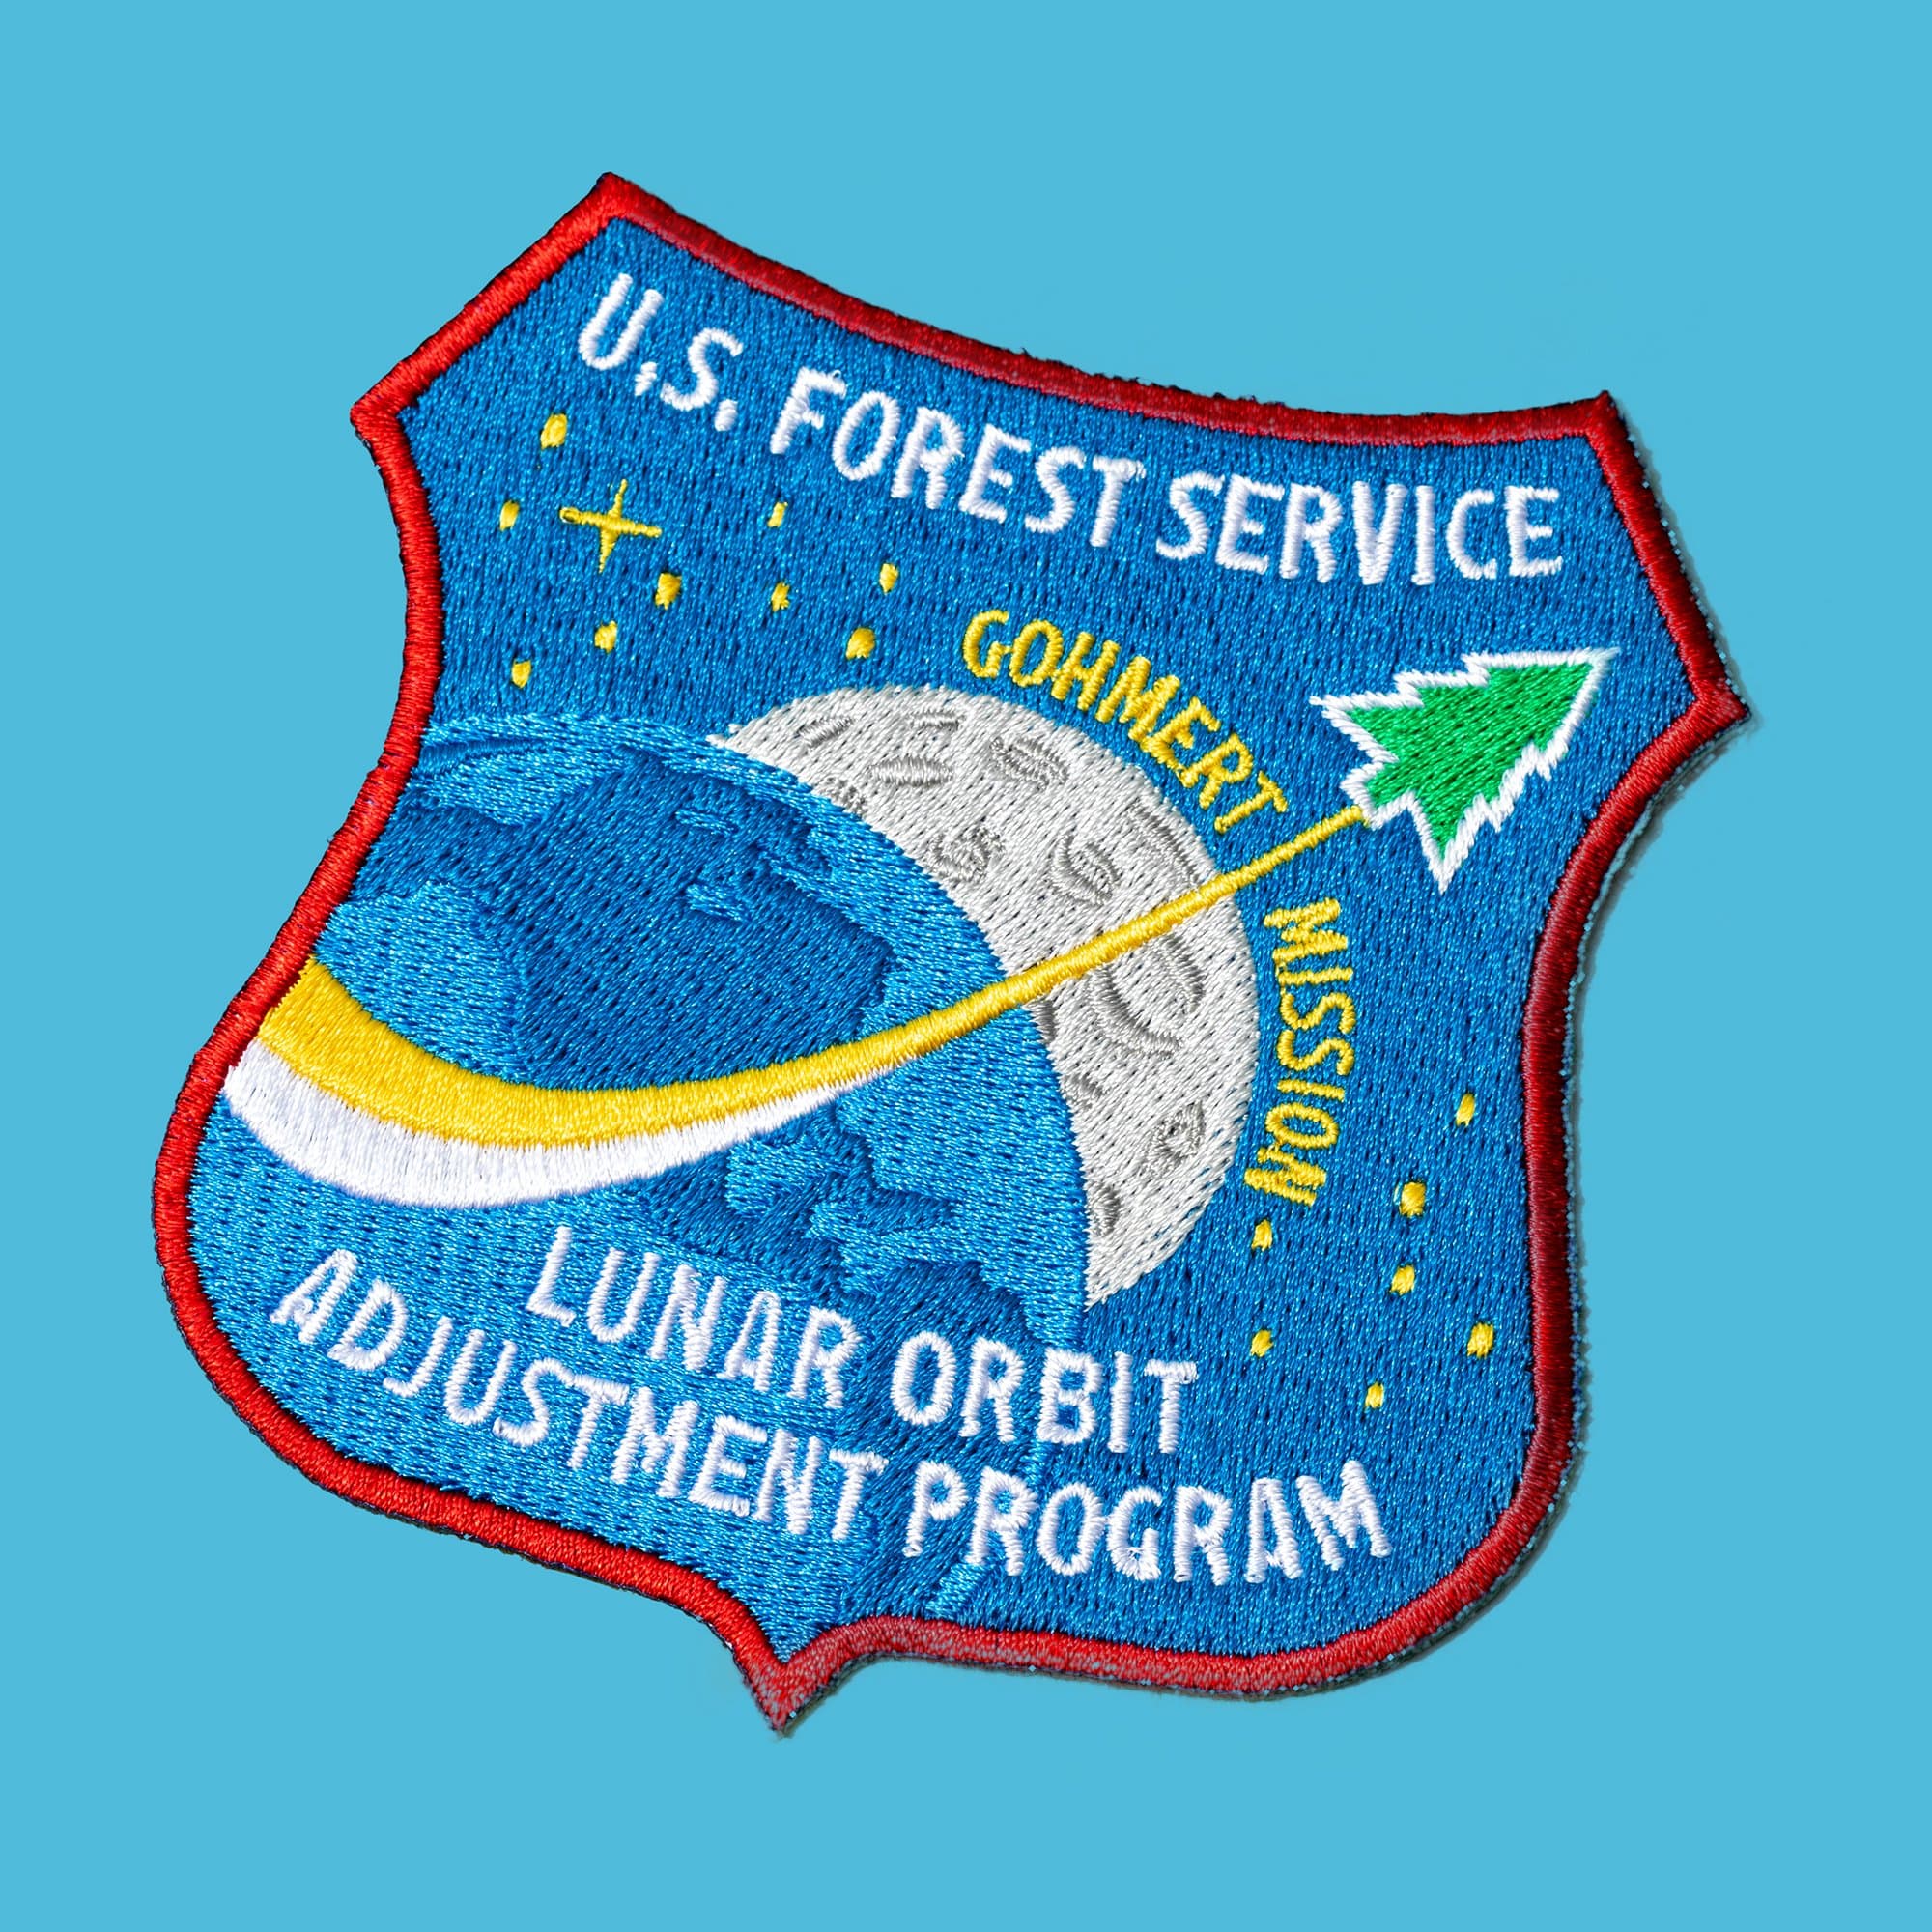 U.S. Forest Service Lunar Orbit Adjustment Program Patch